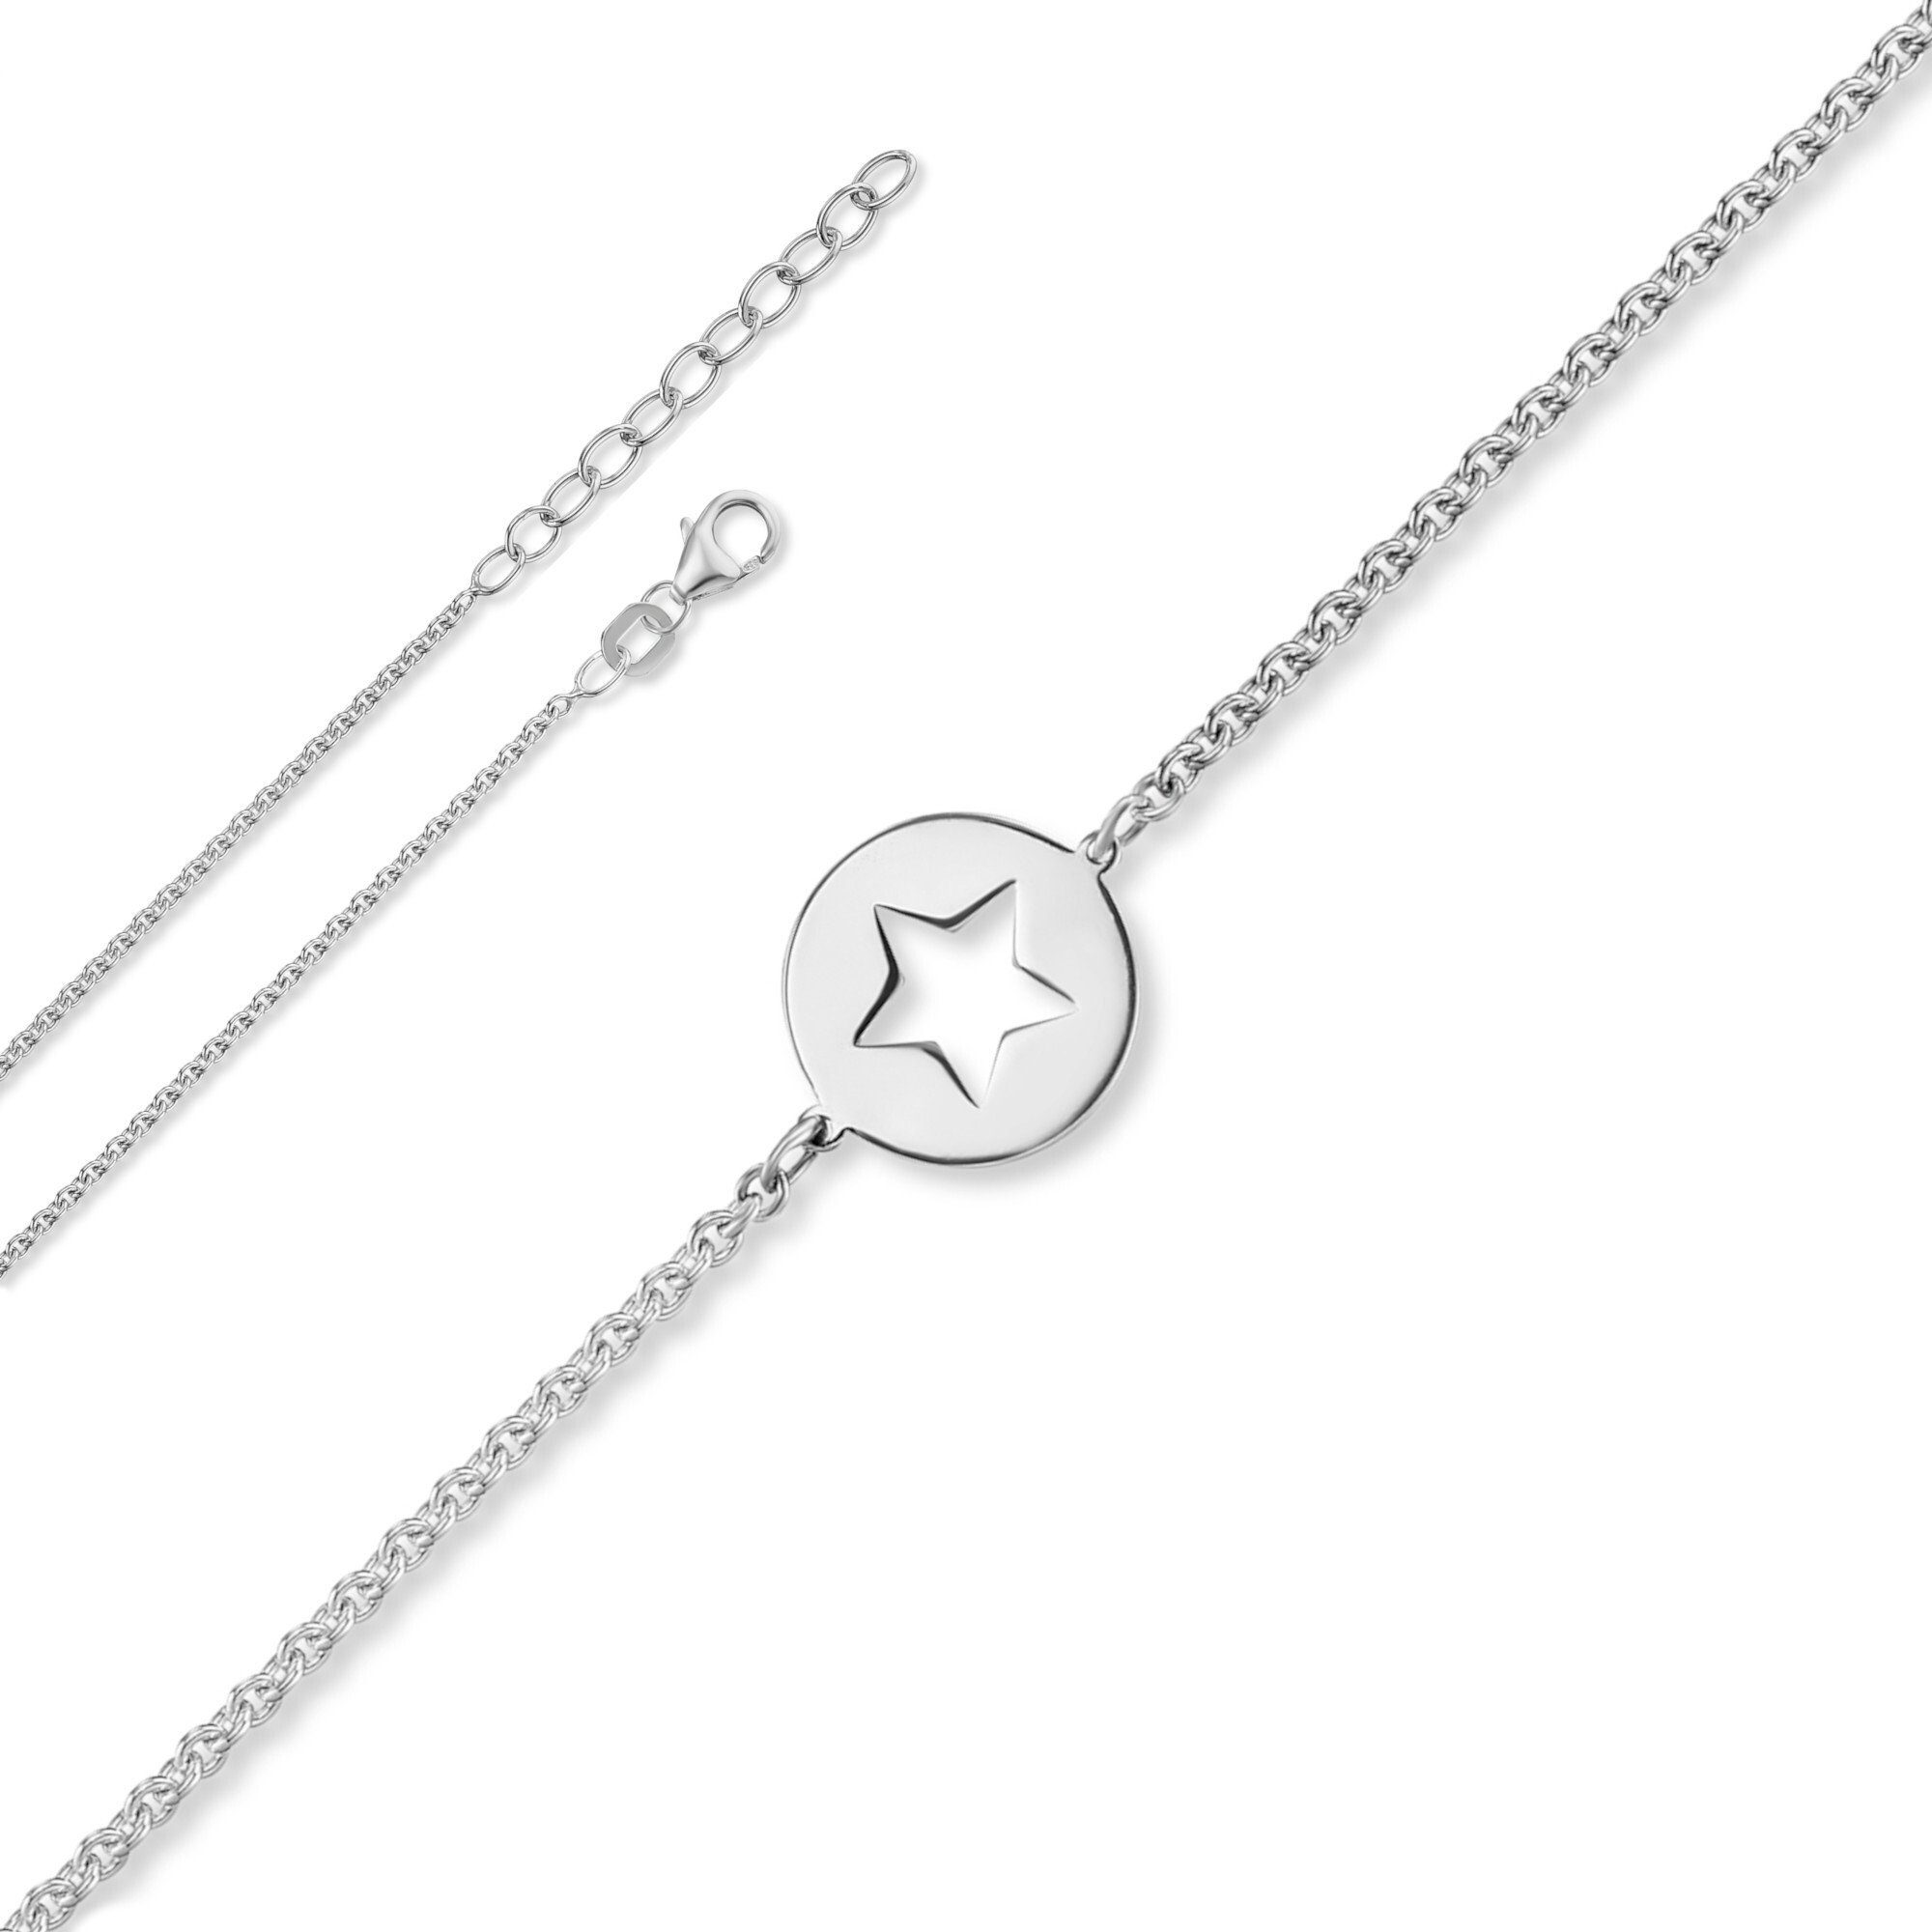 ONE ELEMENT Silberarmband Stern Armband aus 925 Silber 16 cm Ø, Damen Silber Schmuck Rundankerkette Stern